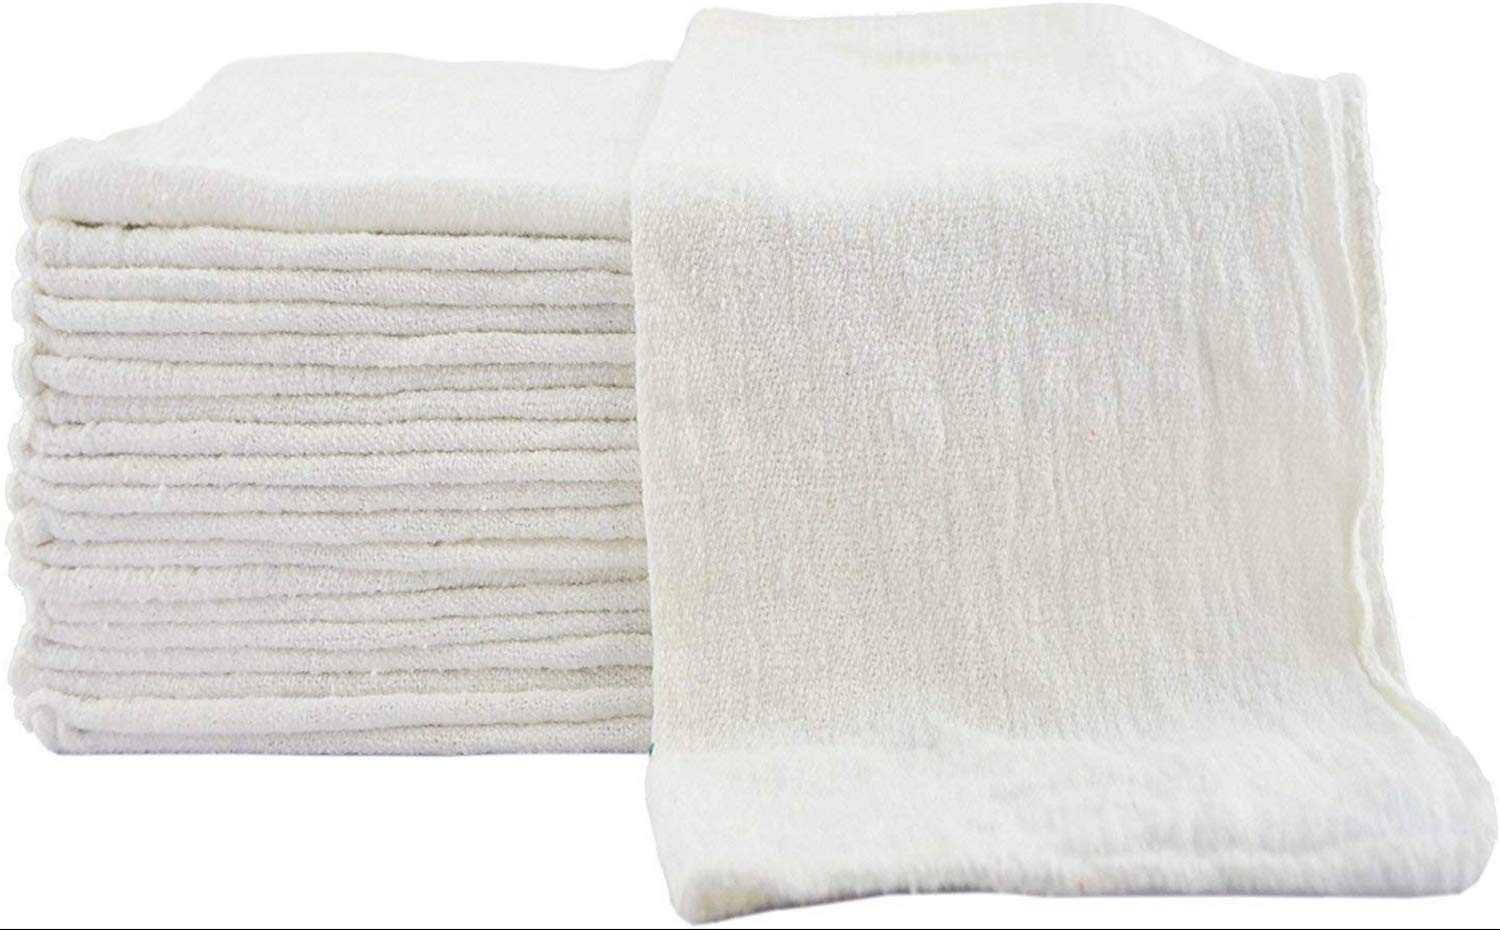 Utopia Towels Cotton Washcloths, 24 - Pack, White